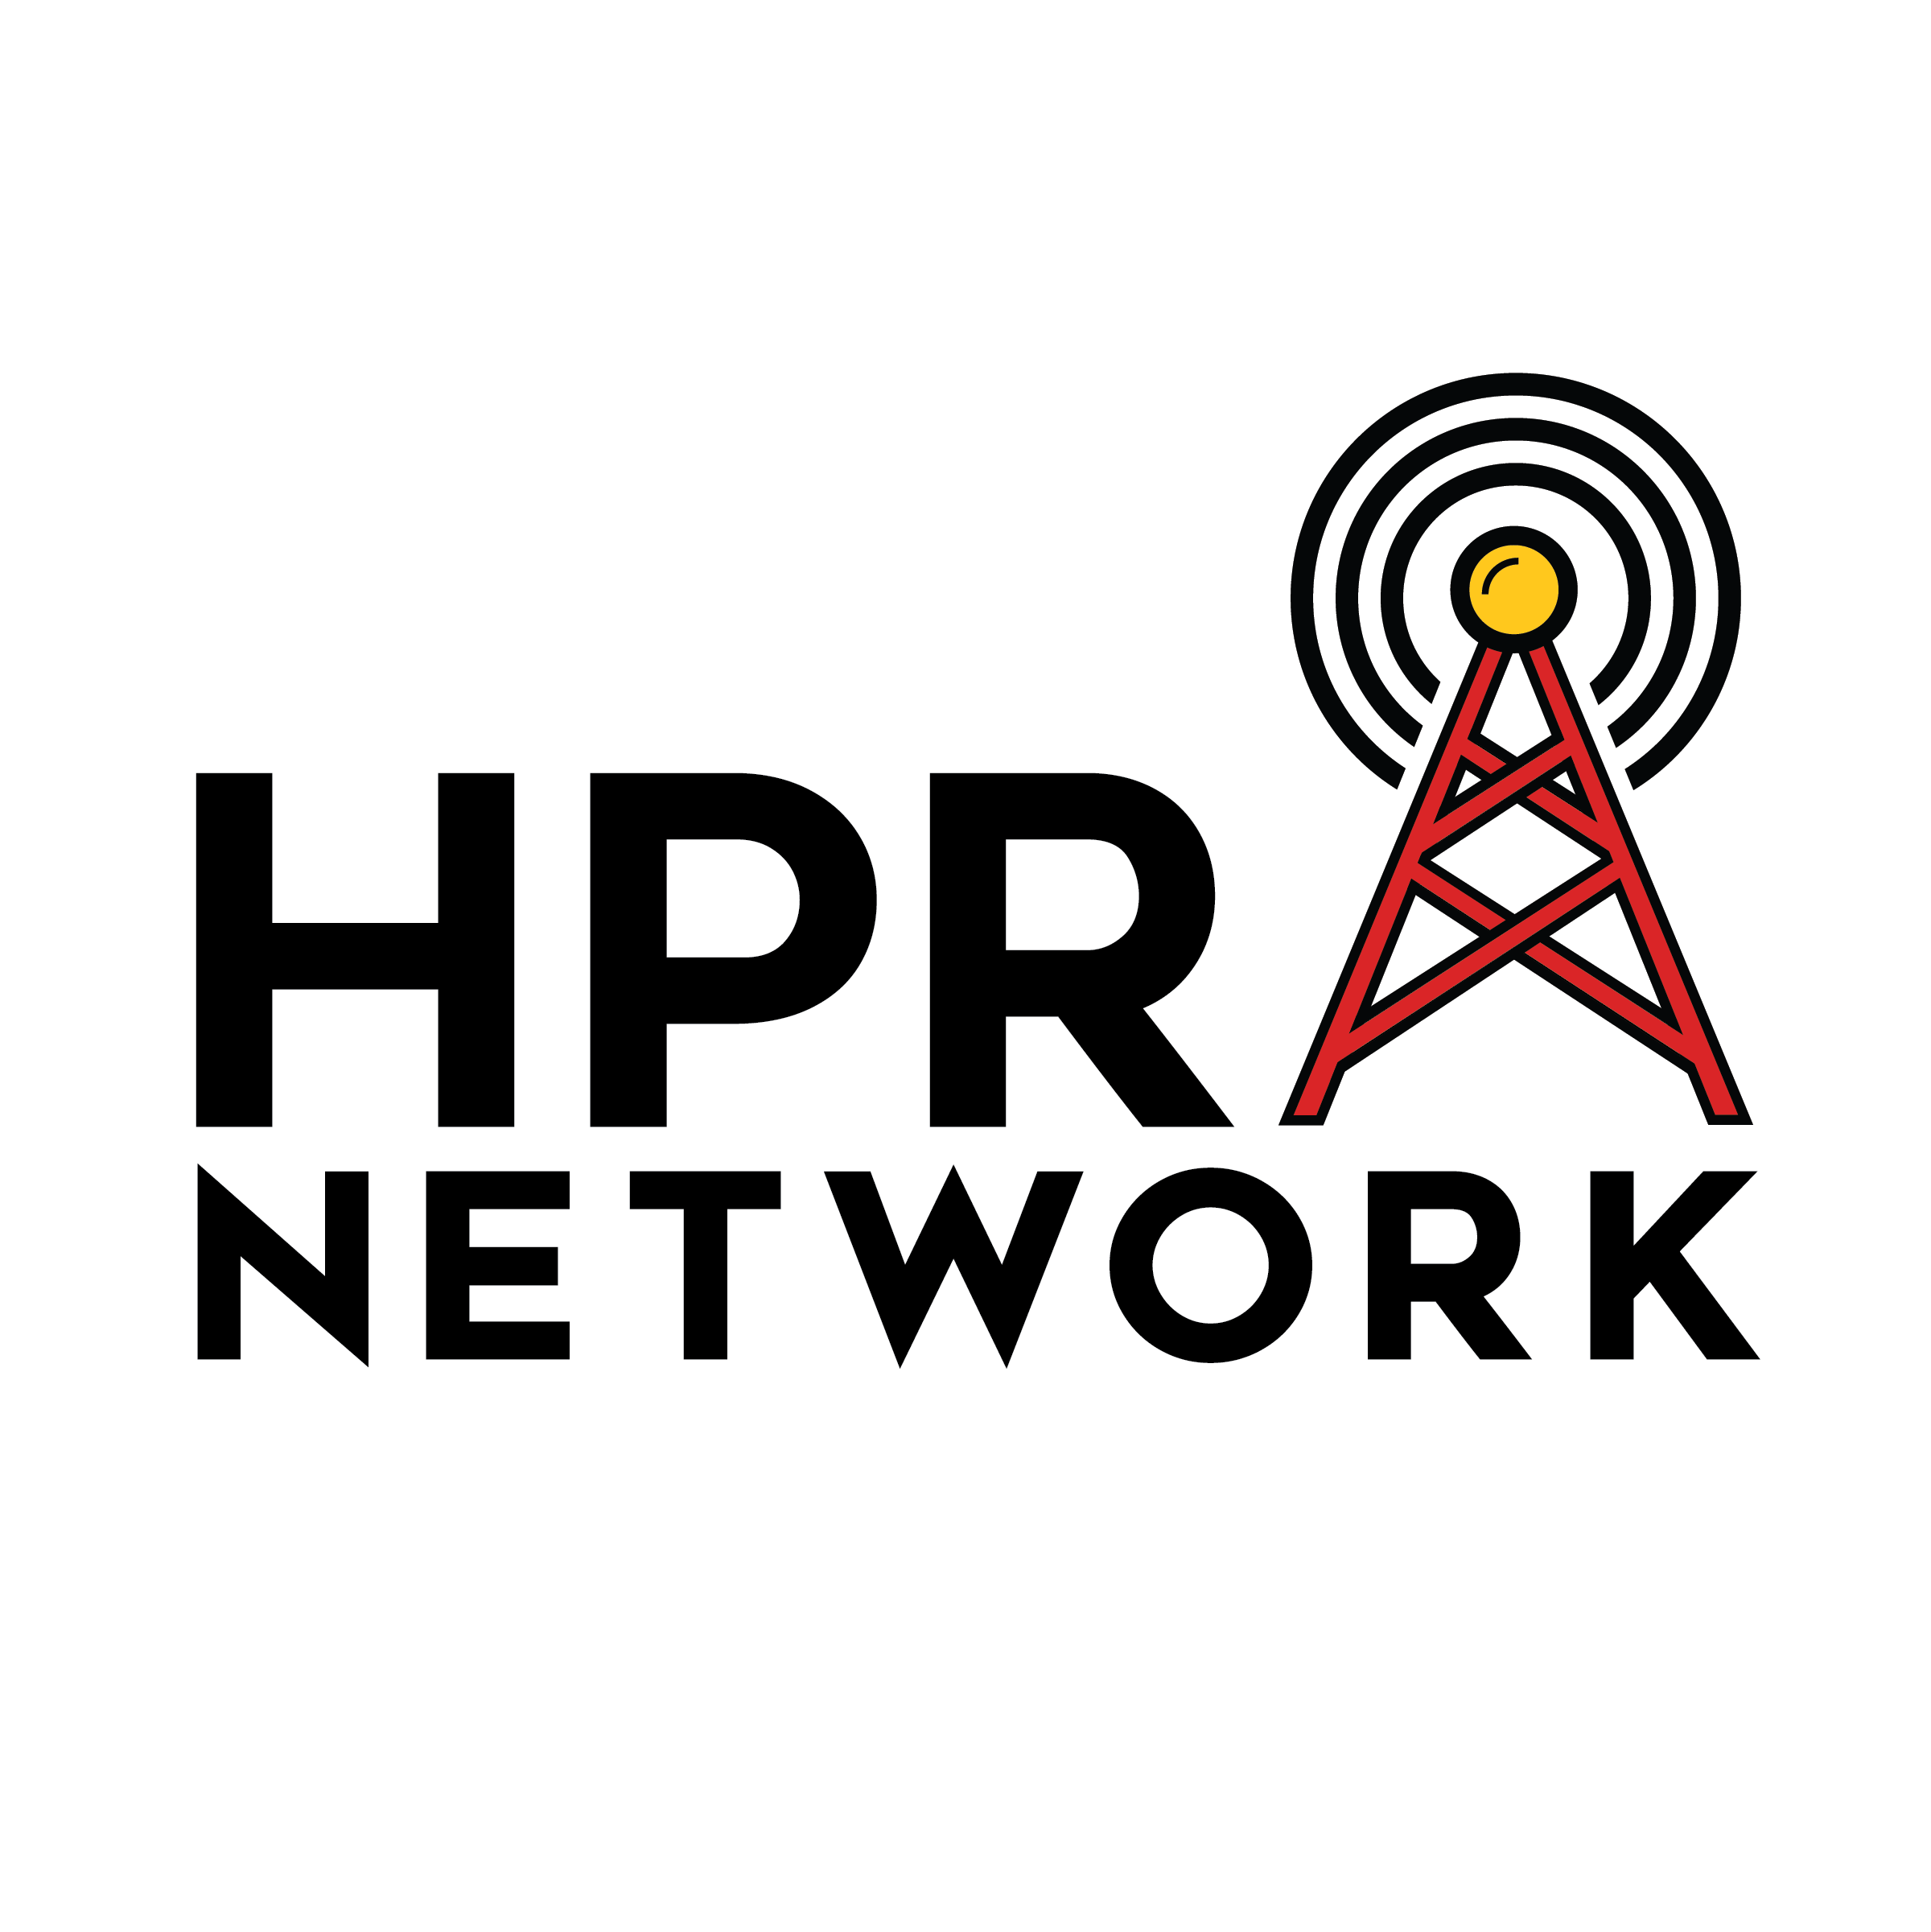 HPR NETWORK